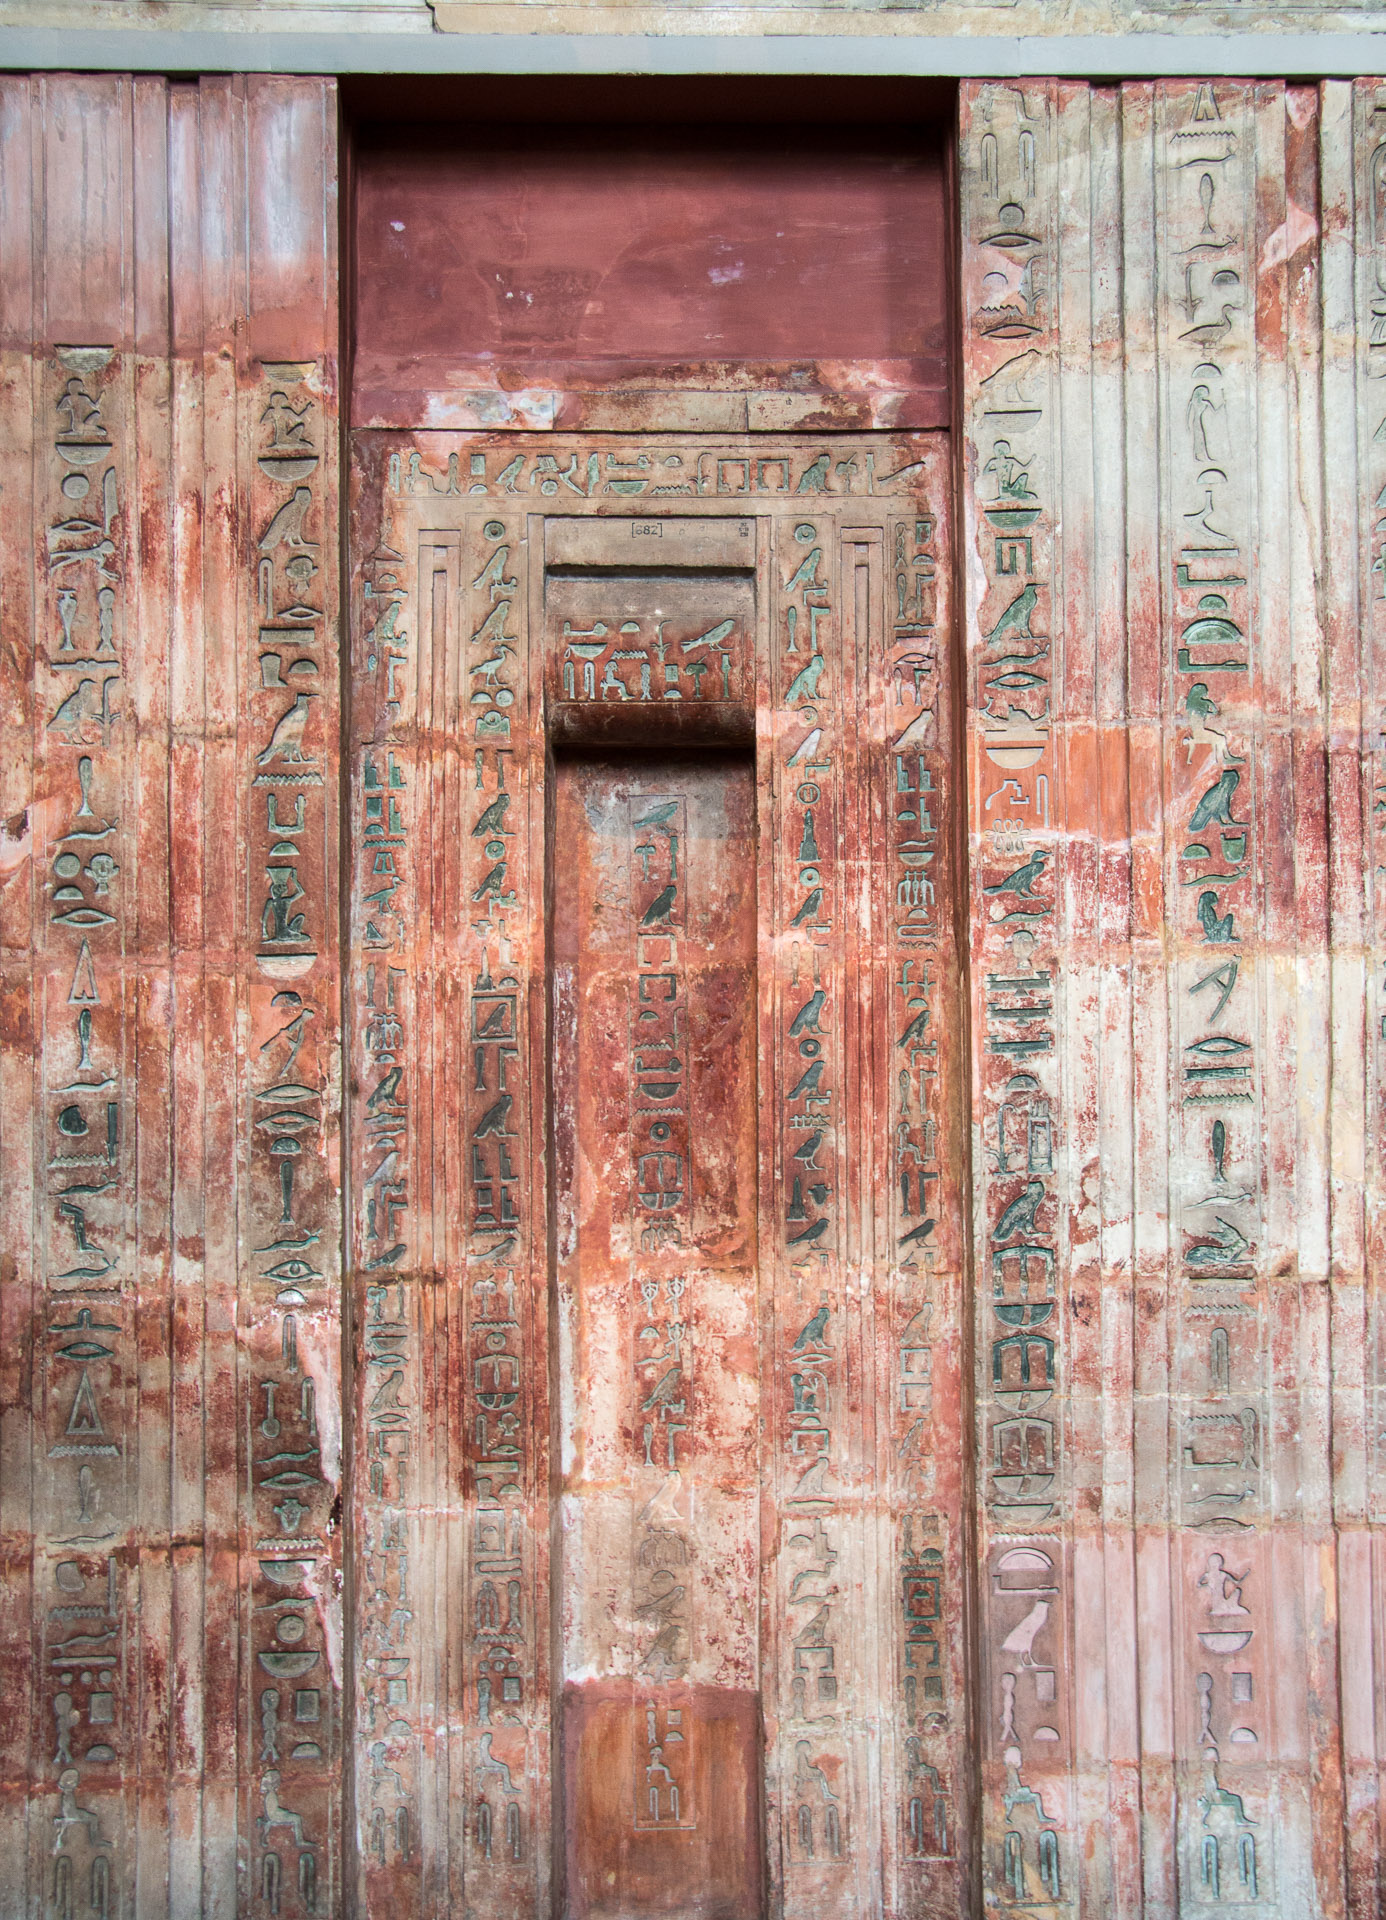 False door of Ptahshepses at the British Museum in London